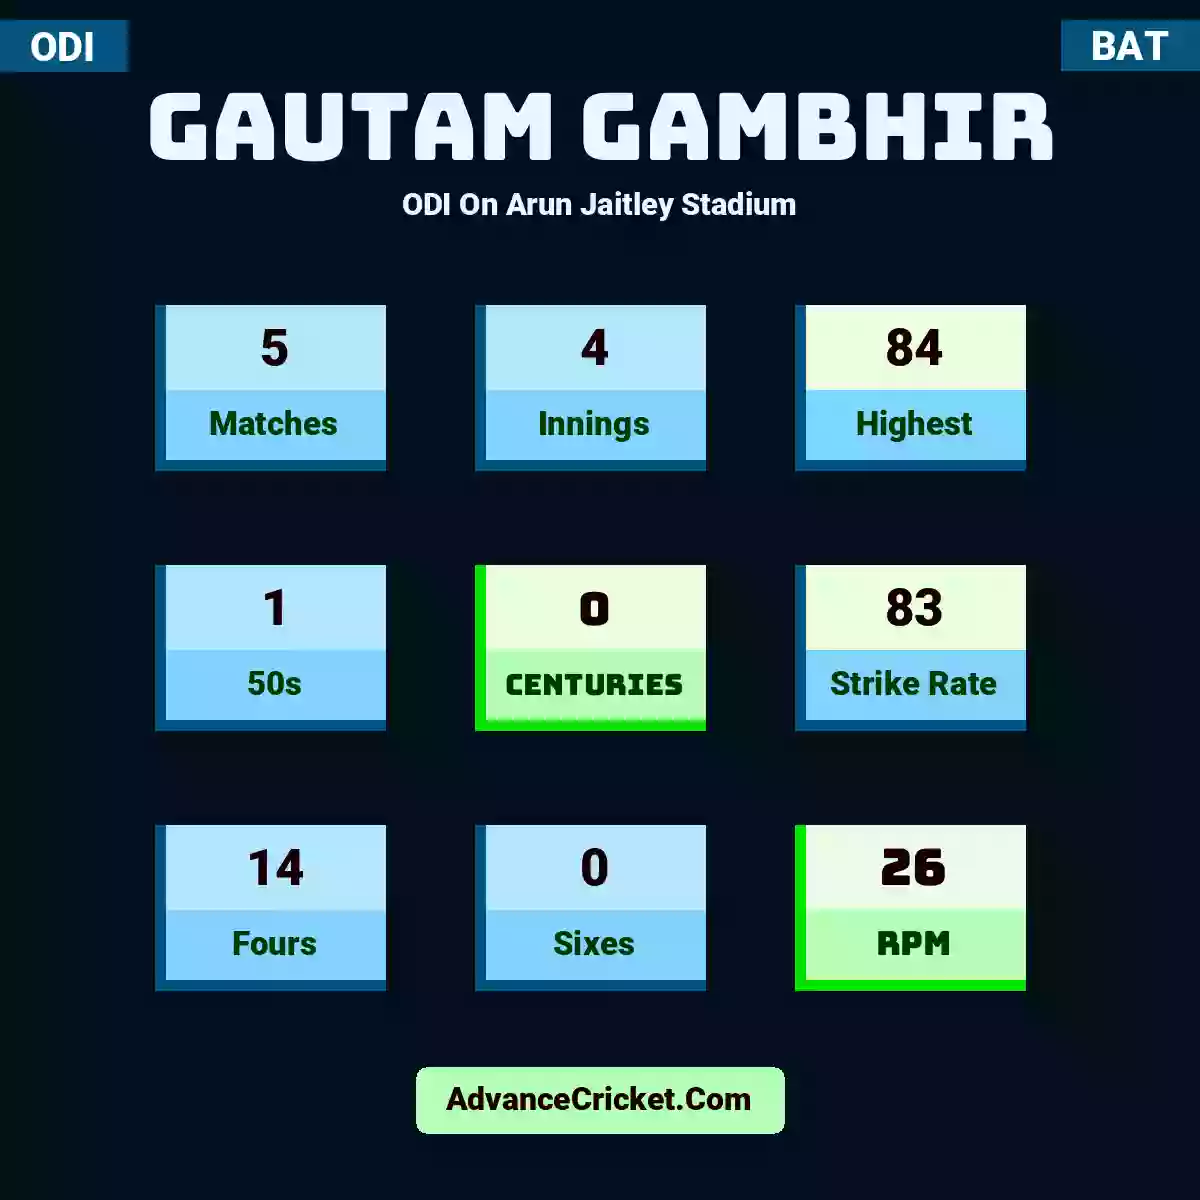 Gautam Gambhir ODI  On Arun Jaitley Stadium, Gautam Gambhir played 5 matches, scored 84 runs as highest, 1 half-centuries, and 0 centuries, with a strike rate of 83. G.Gambhir hit 14 fours and 0 sixes, with an RPM of 26.